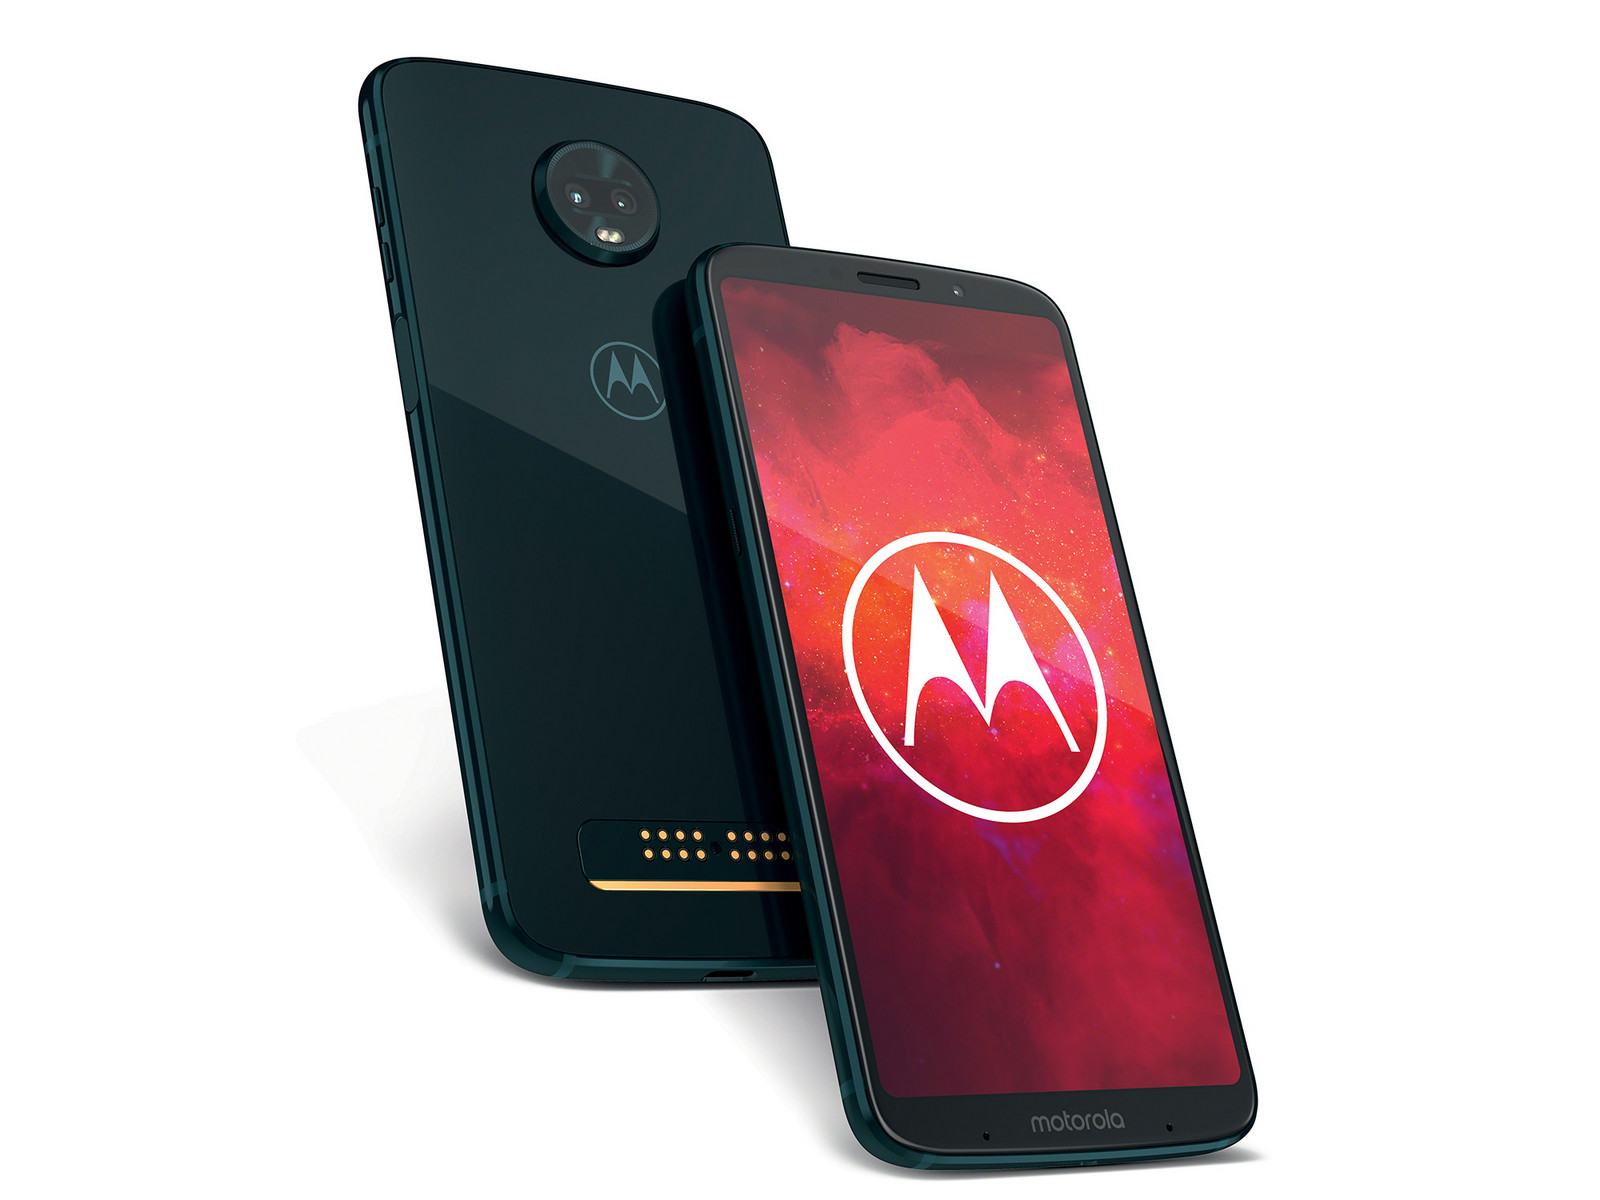 Motorola Moto Z3 Play Smartphone Review - NotebookCheck.net Reviews